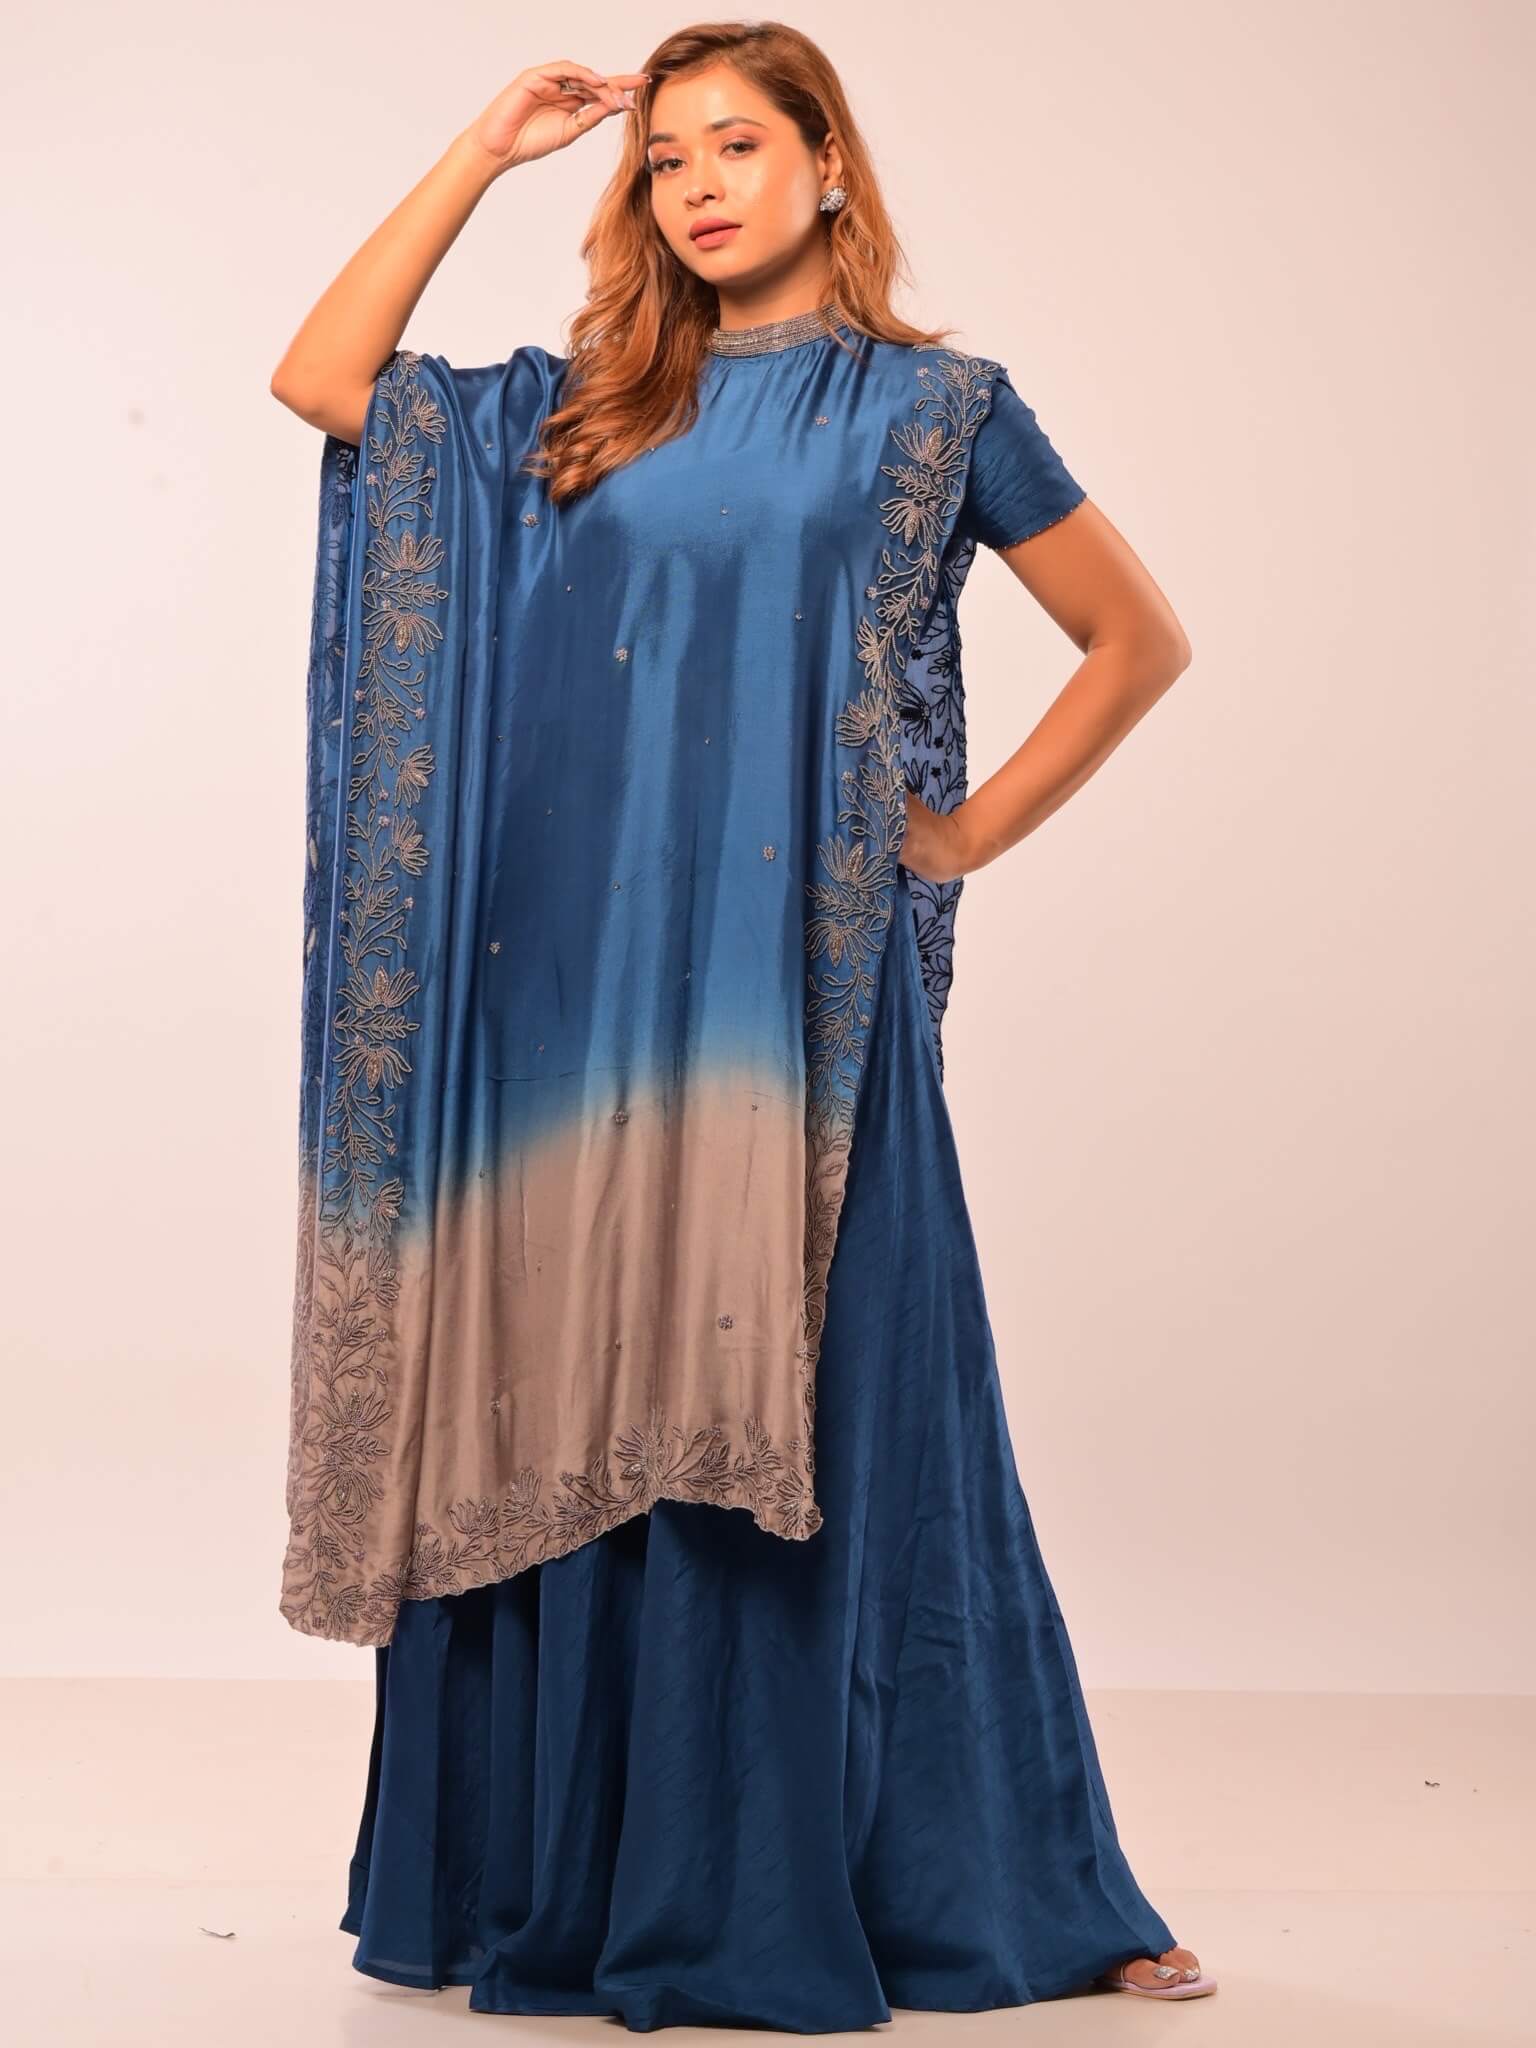 Modish fusion wear set - Buy Designer Ethnic Wear for Women Online in India  - Idaho Clothing